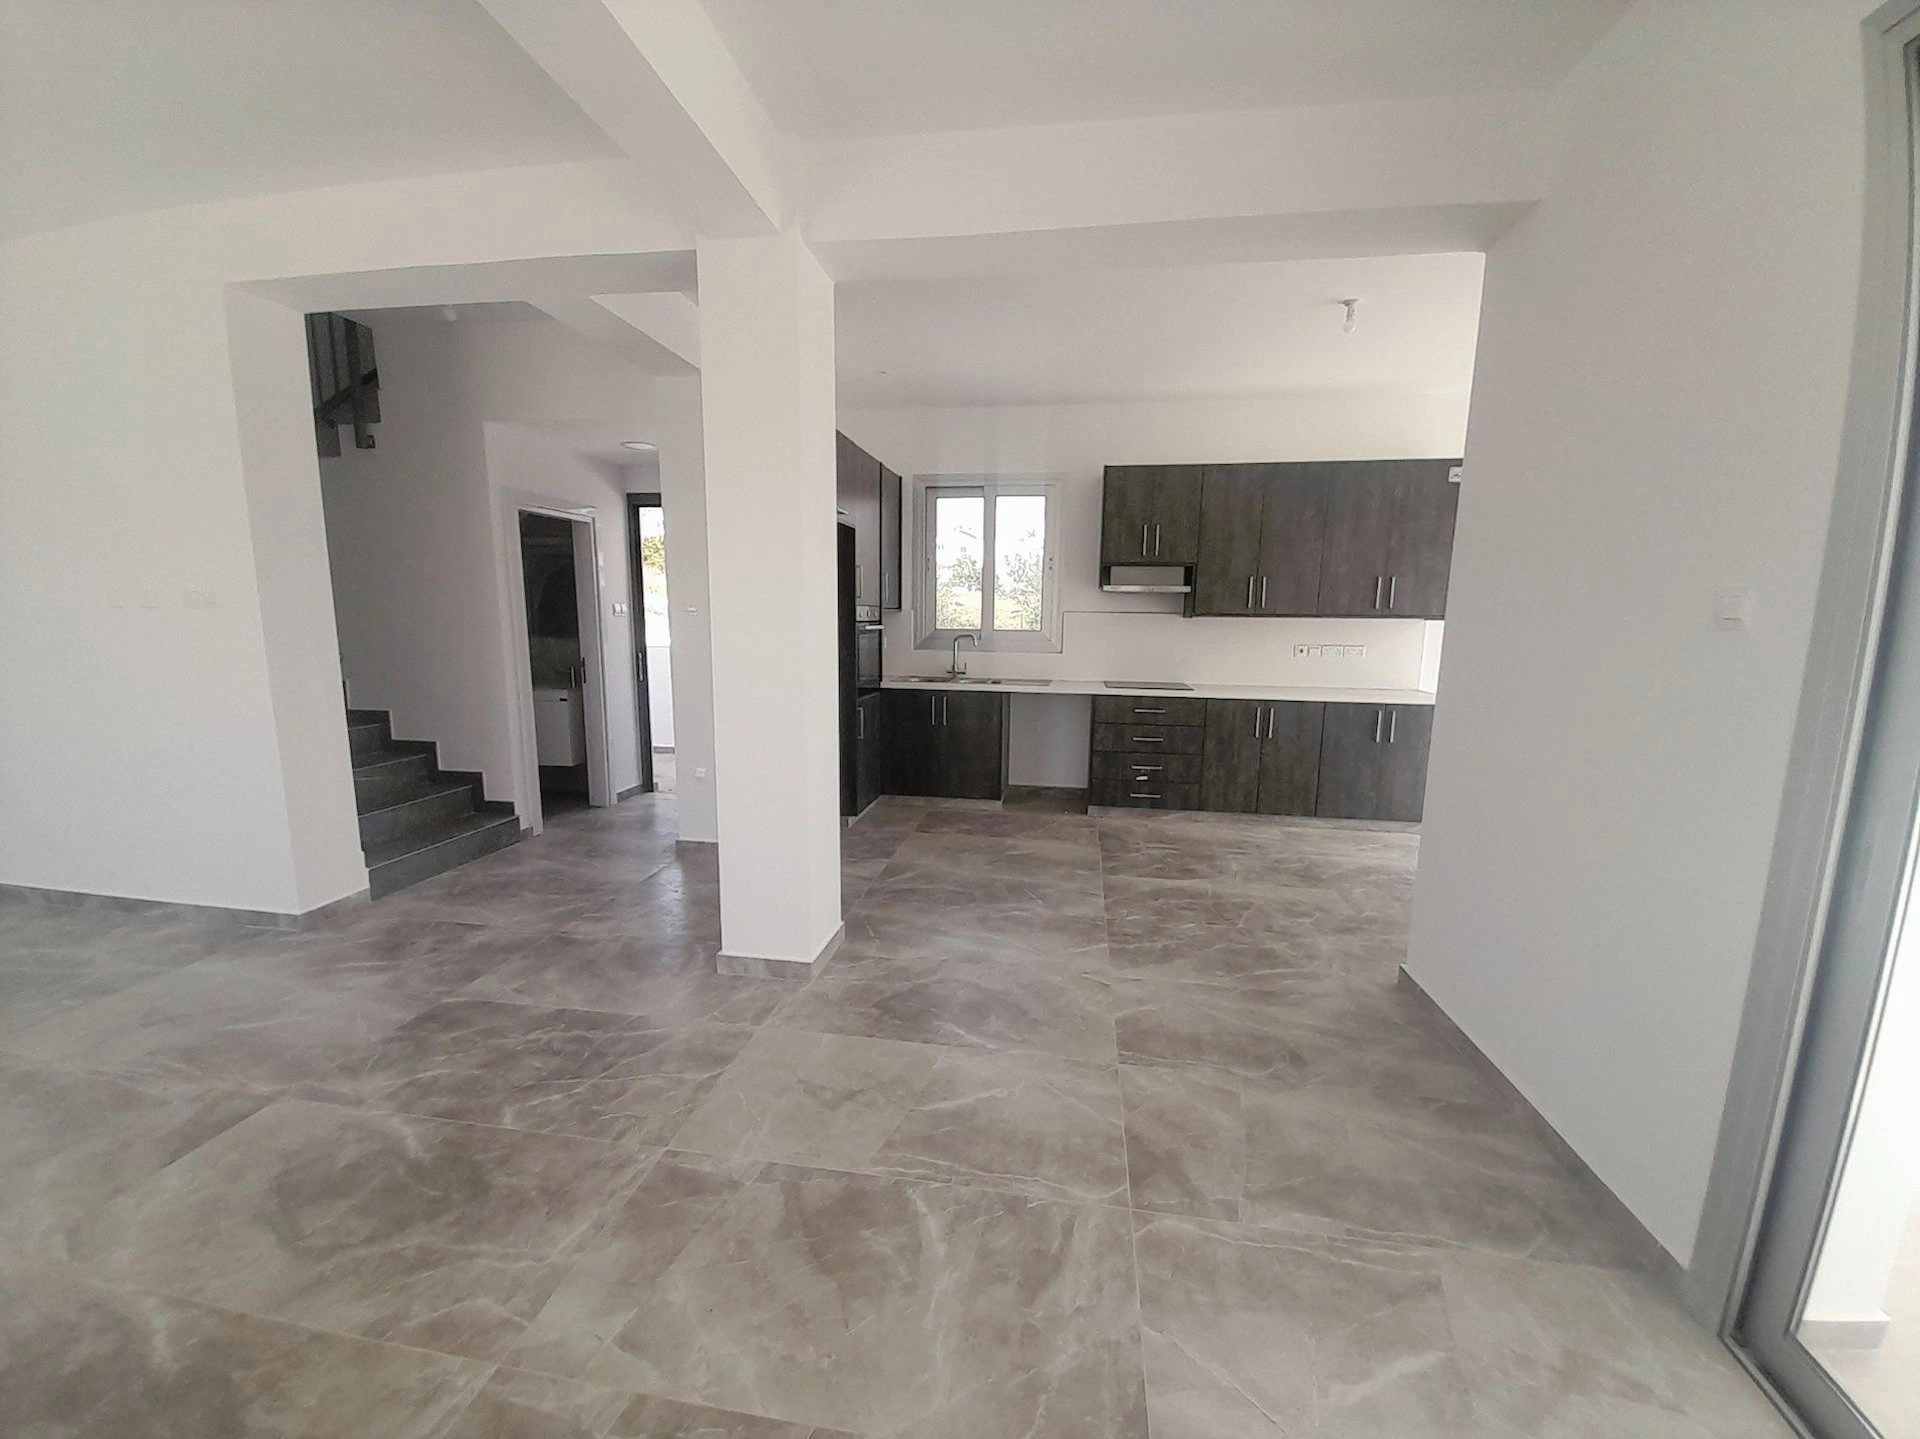 3 Bedroom Villa for Rent in Pegeia, Paphos District